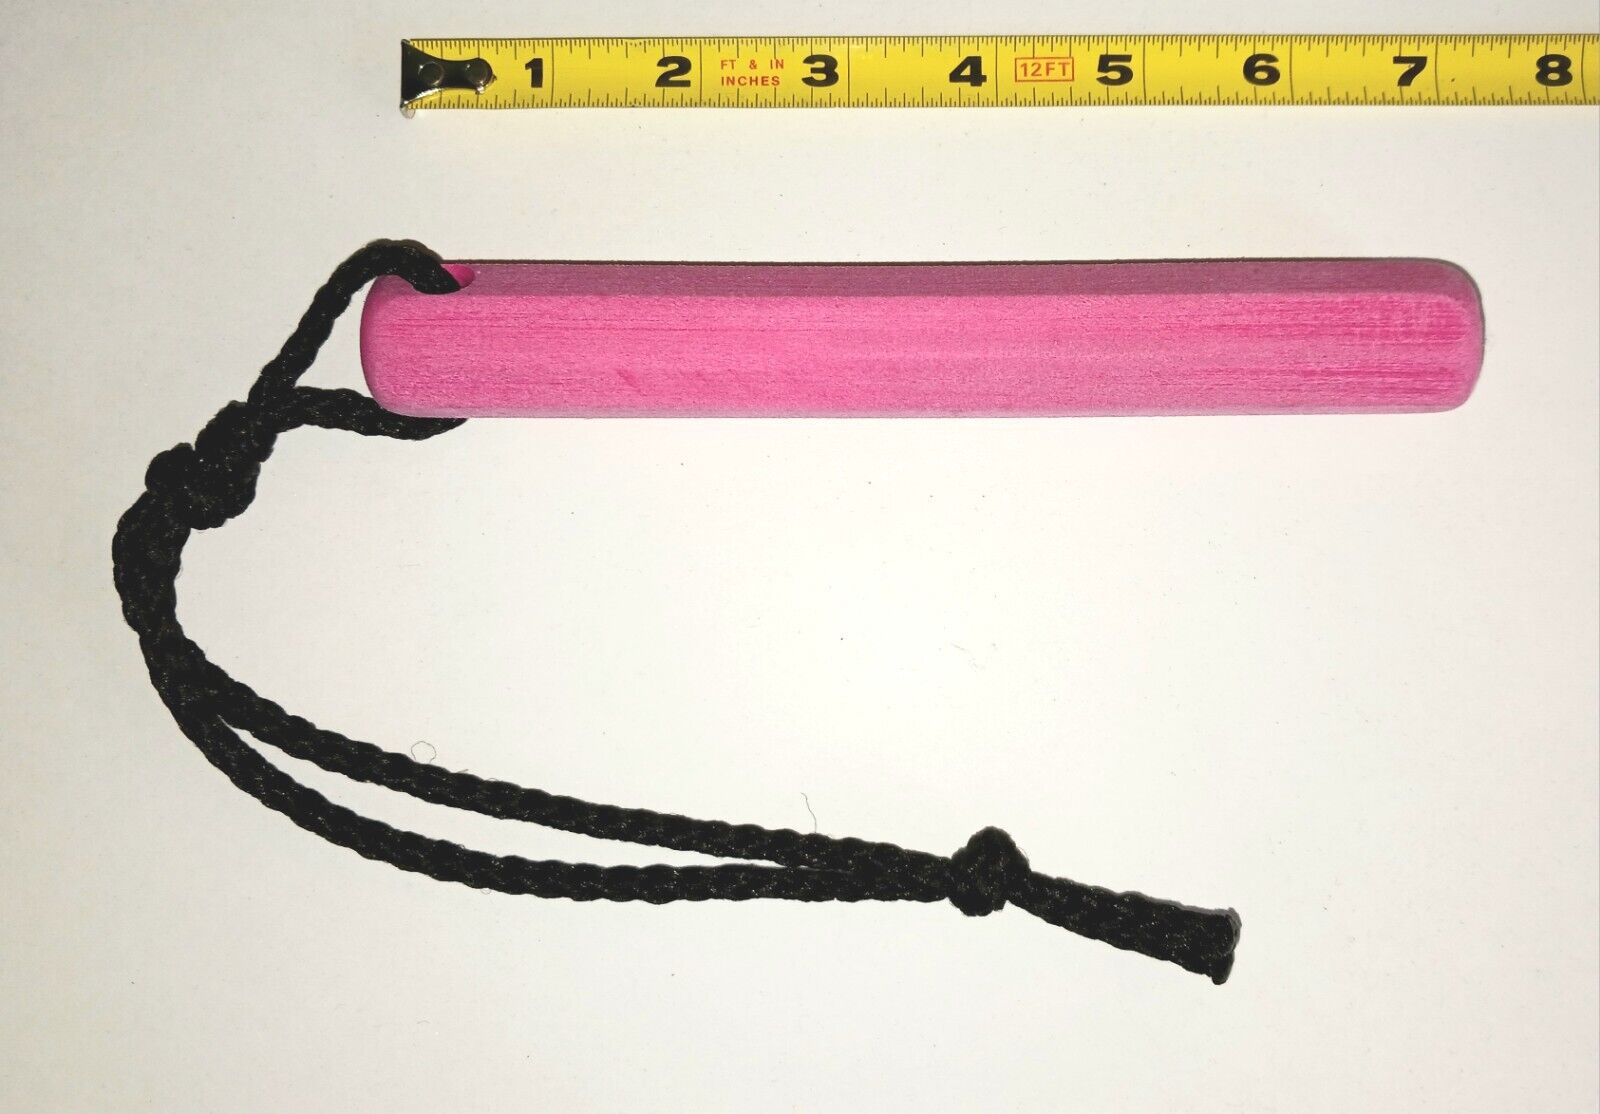 Hot Pink Kubotan Octagon Portable Self Defense Weapon Martial Art Polypropylene